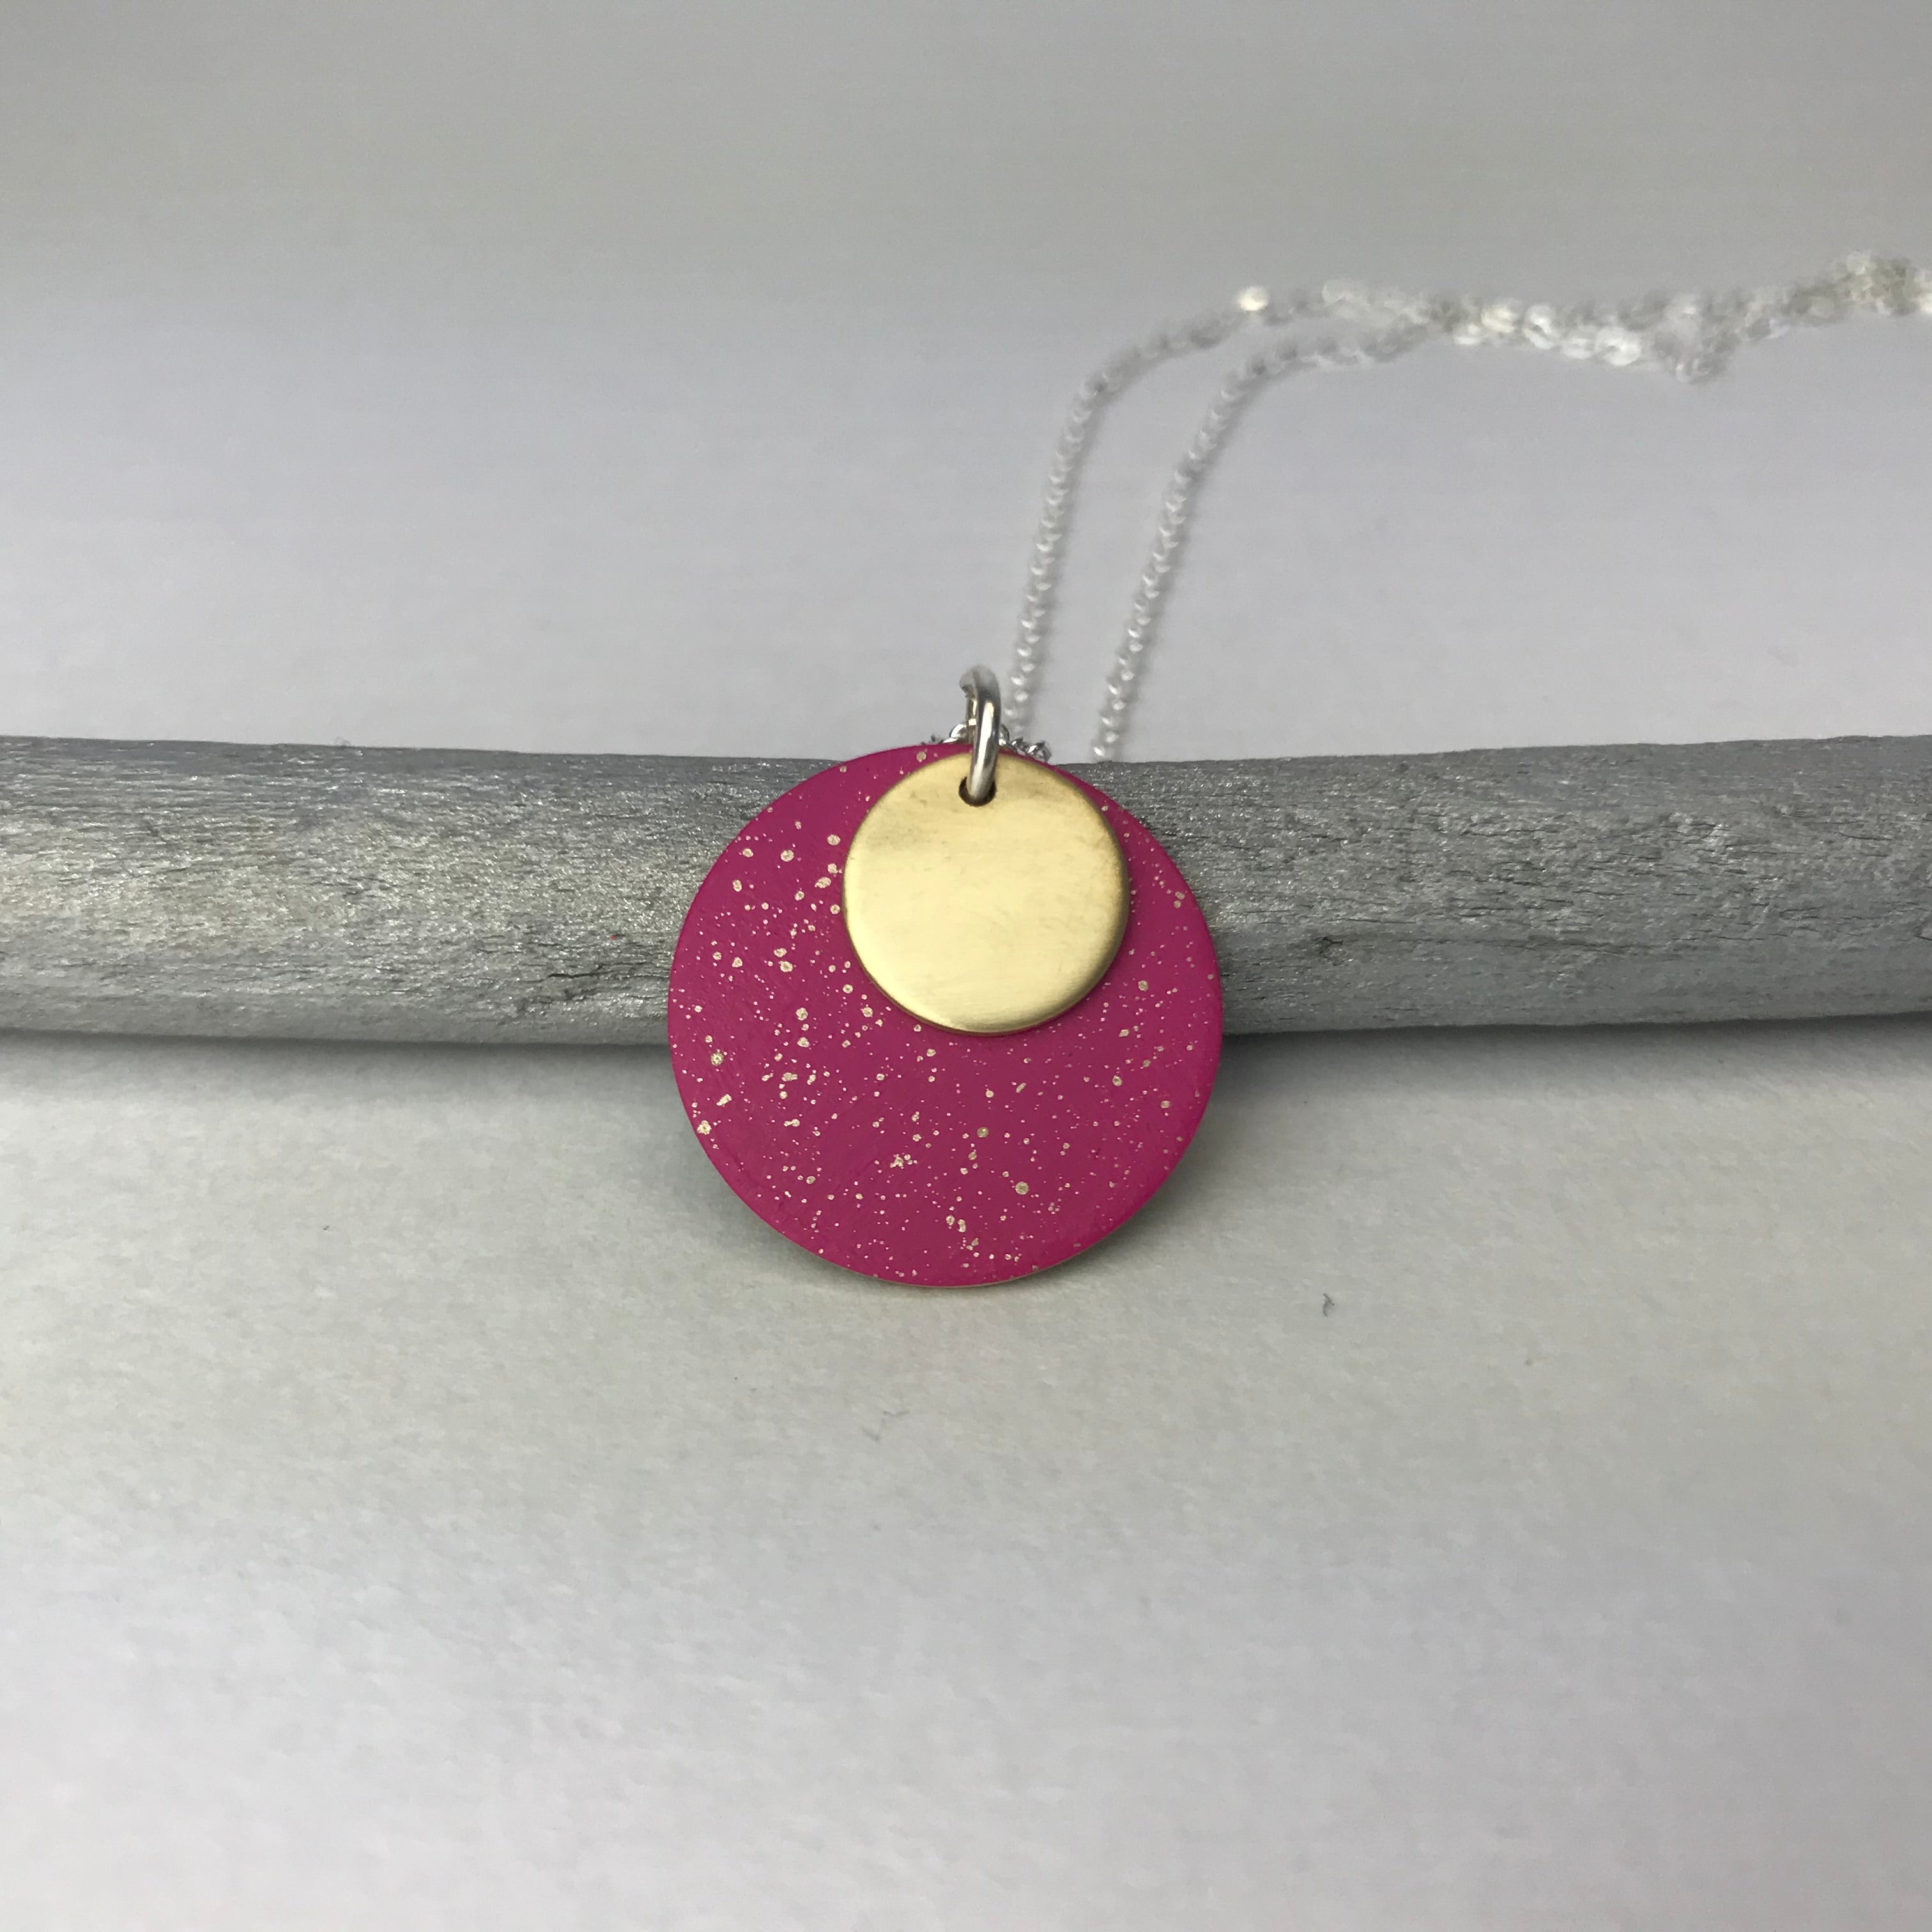 Santa Cruz Small Dot Necklace - The Nancy Smillie Shop - Art, Jewellery & Designer Gifts Glasgow